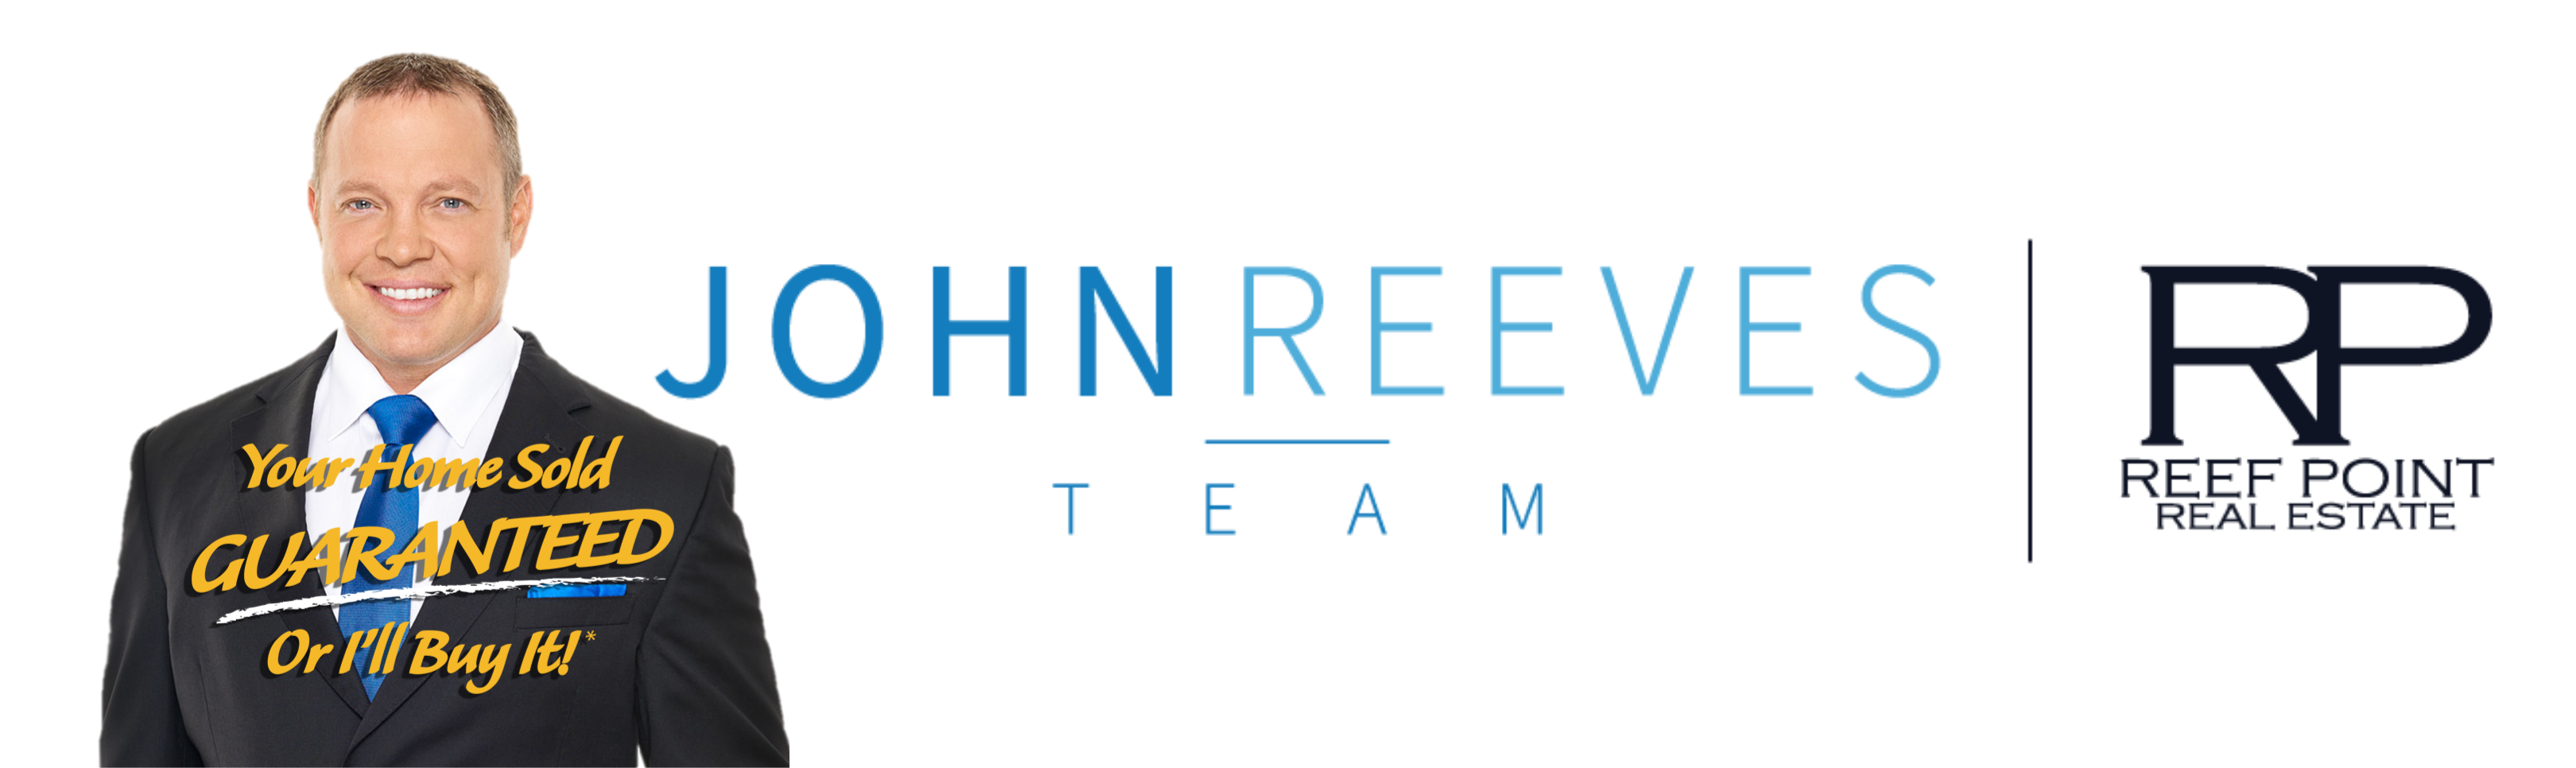 John Reeves Team | Reef Point Real Estate